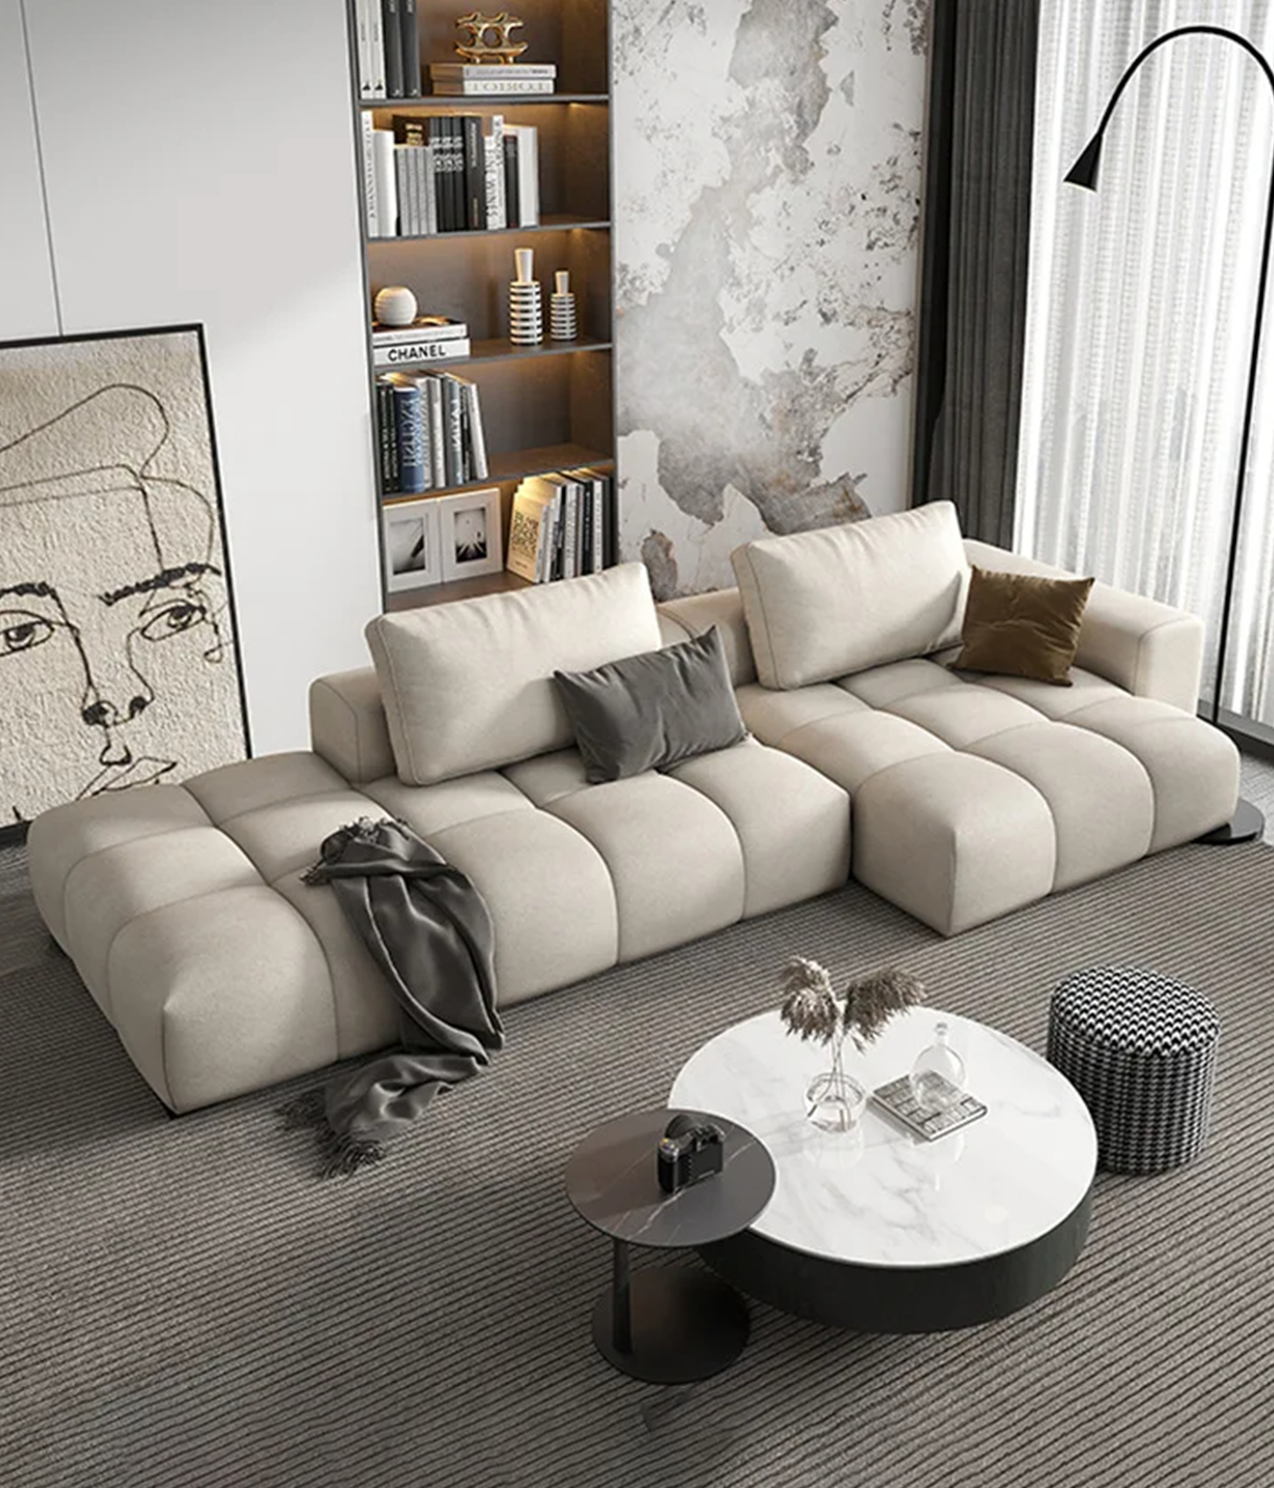 Italian design cream style fabric sofa